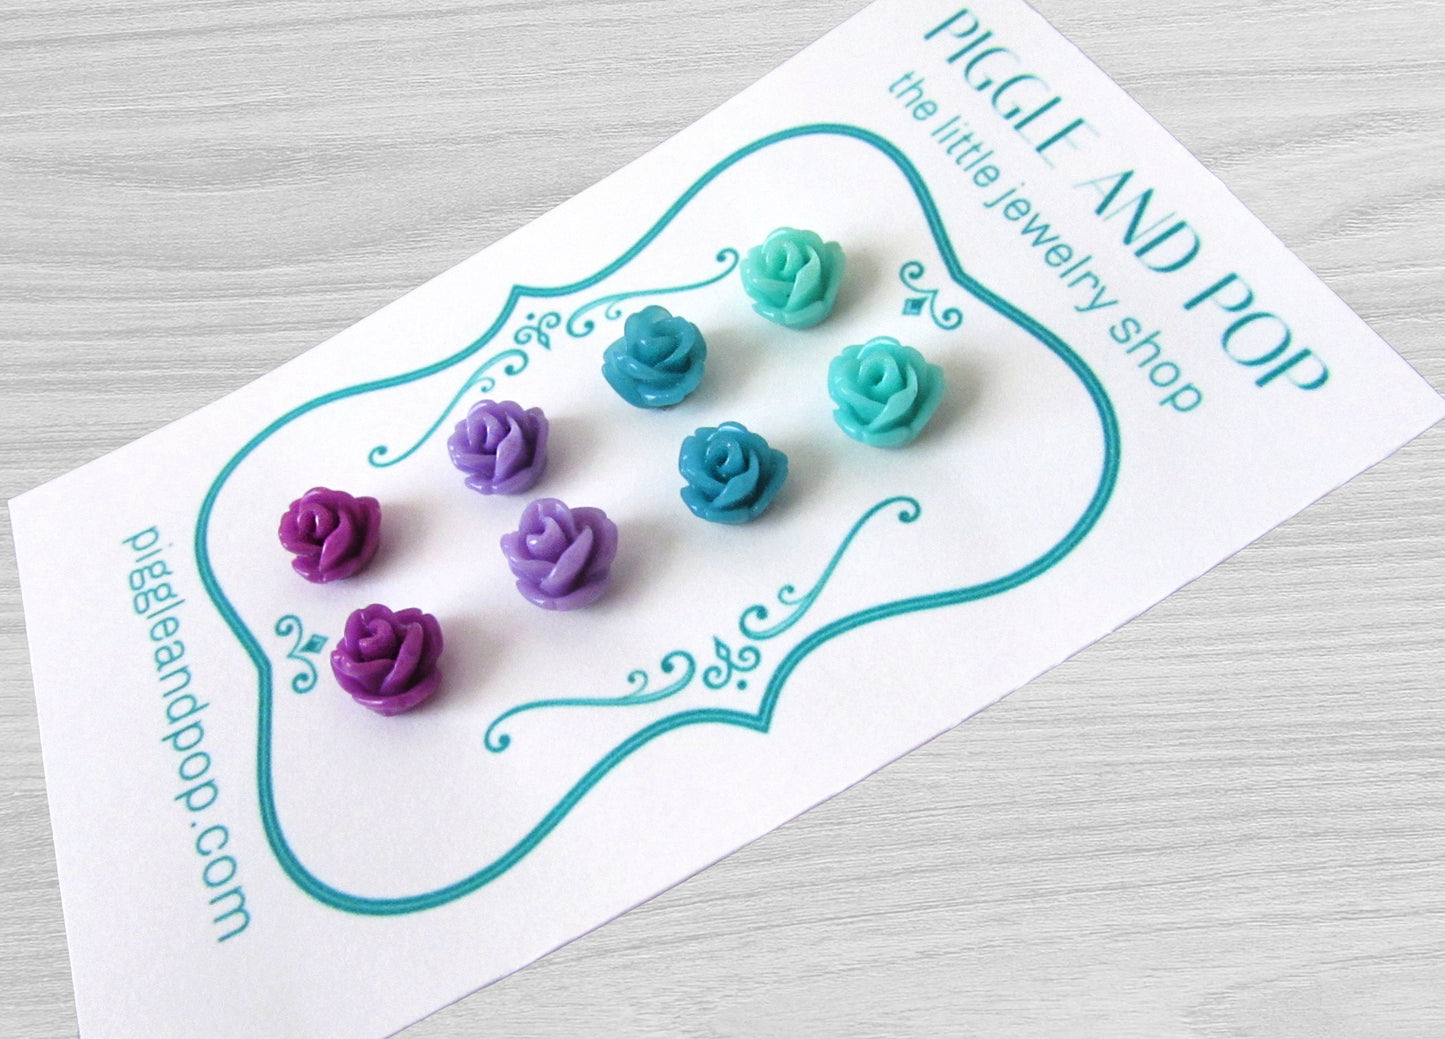 Tiny Rose Earrings. Flower Resin Earrings in Mint Green, Teal Blue, Lavender and Plum Purple. Hypoallergenic Small Flower Stud Earrings.